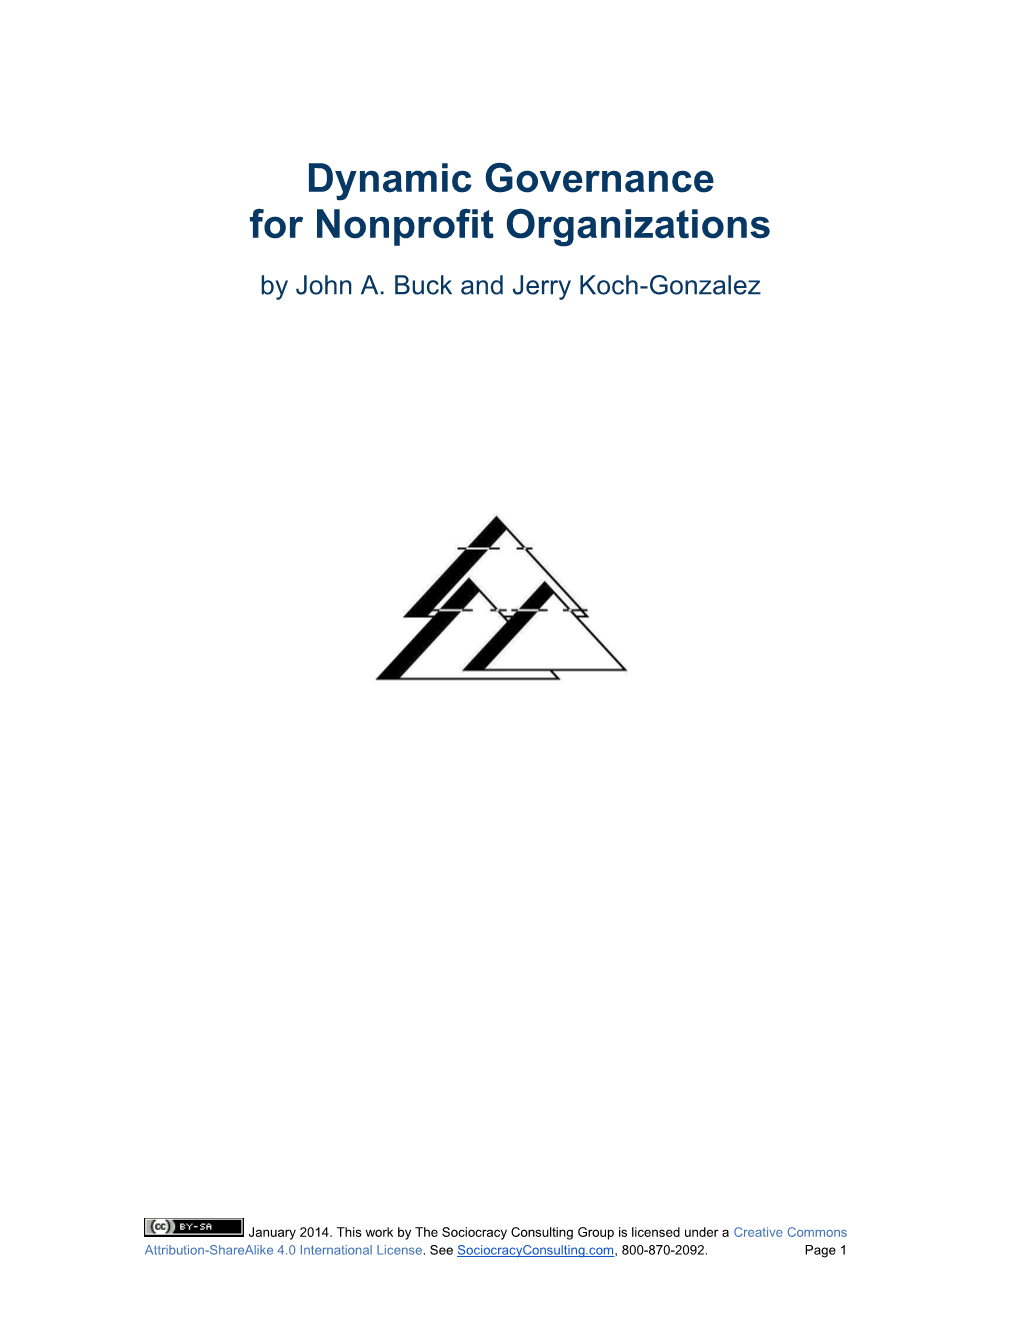 Dynamic Governance for Nonprofit Organizations